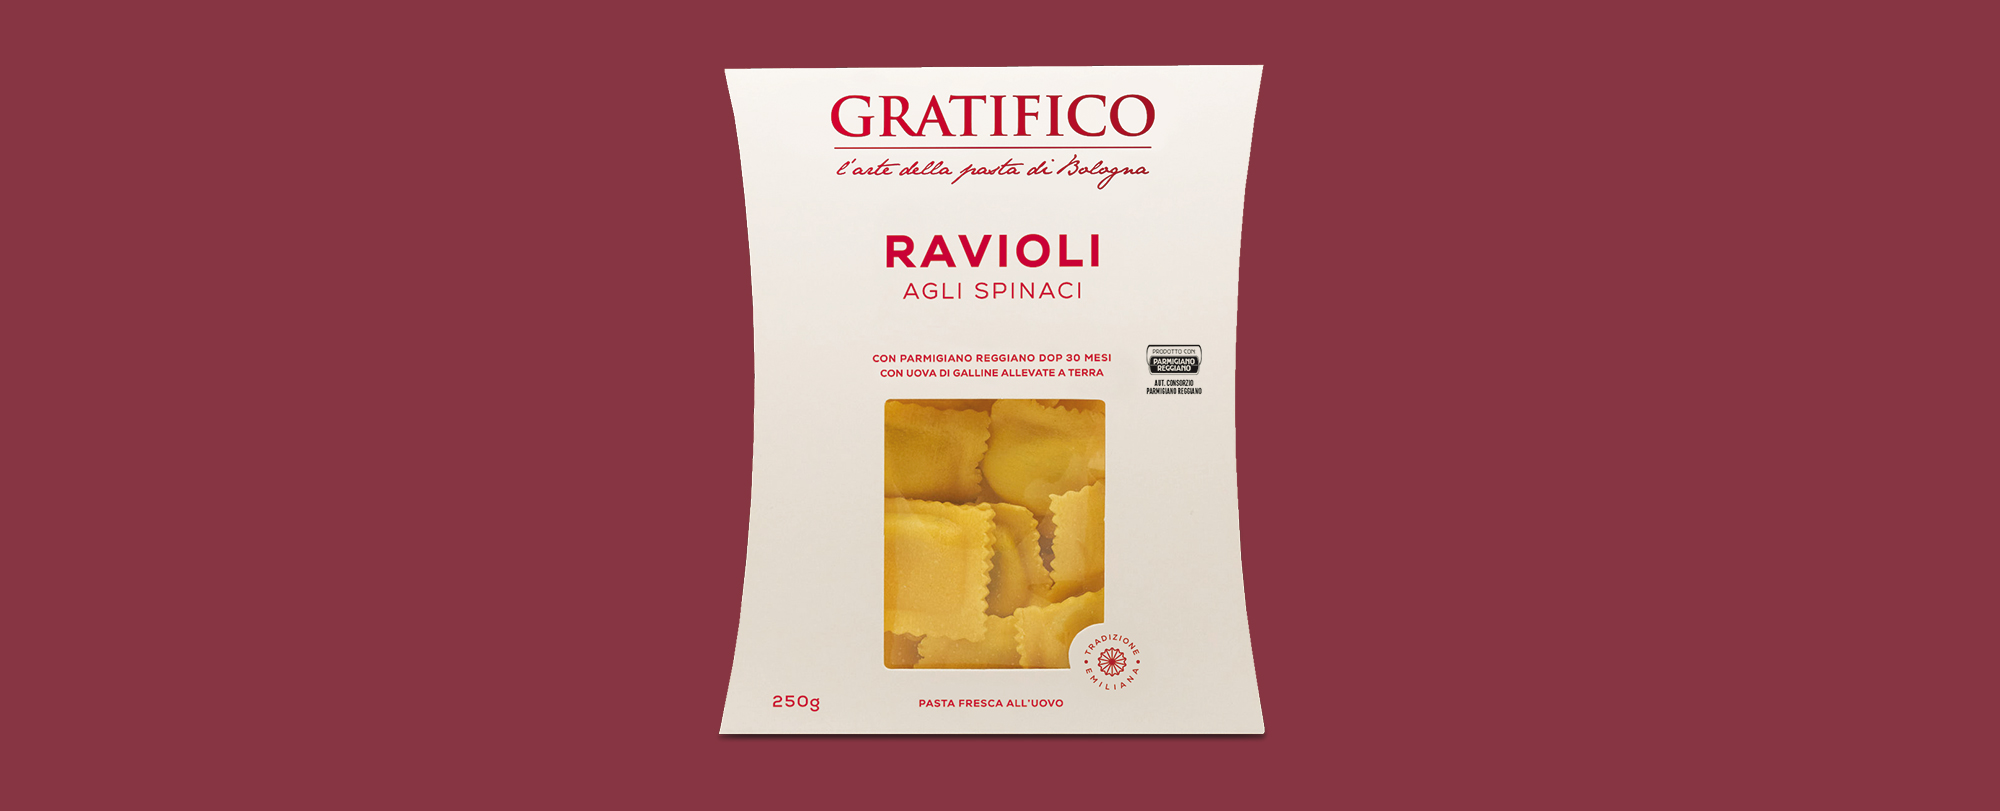 ravioli-spinaci-pack-mockup